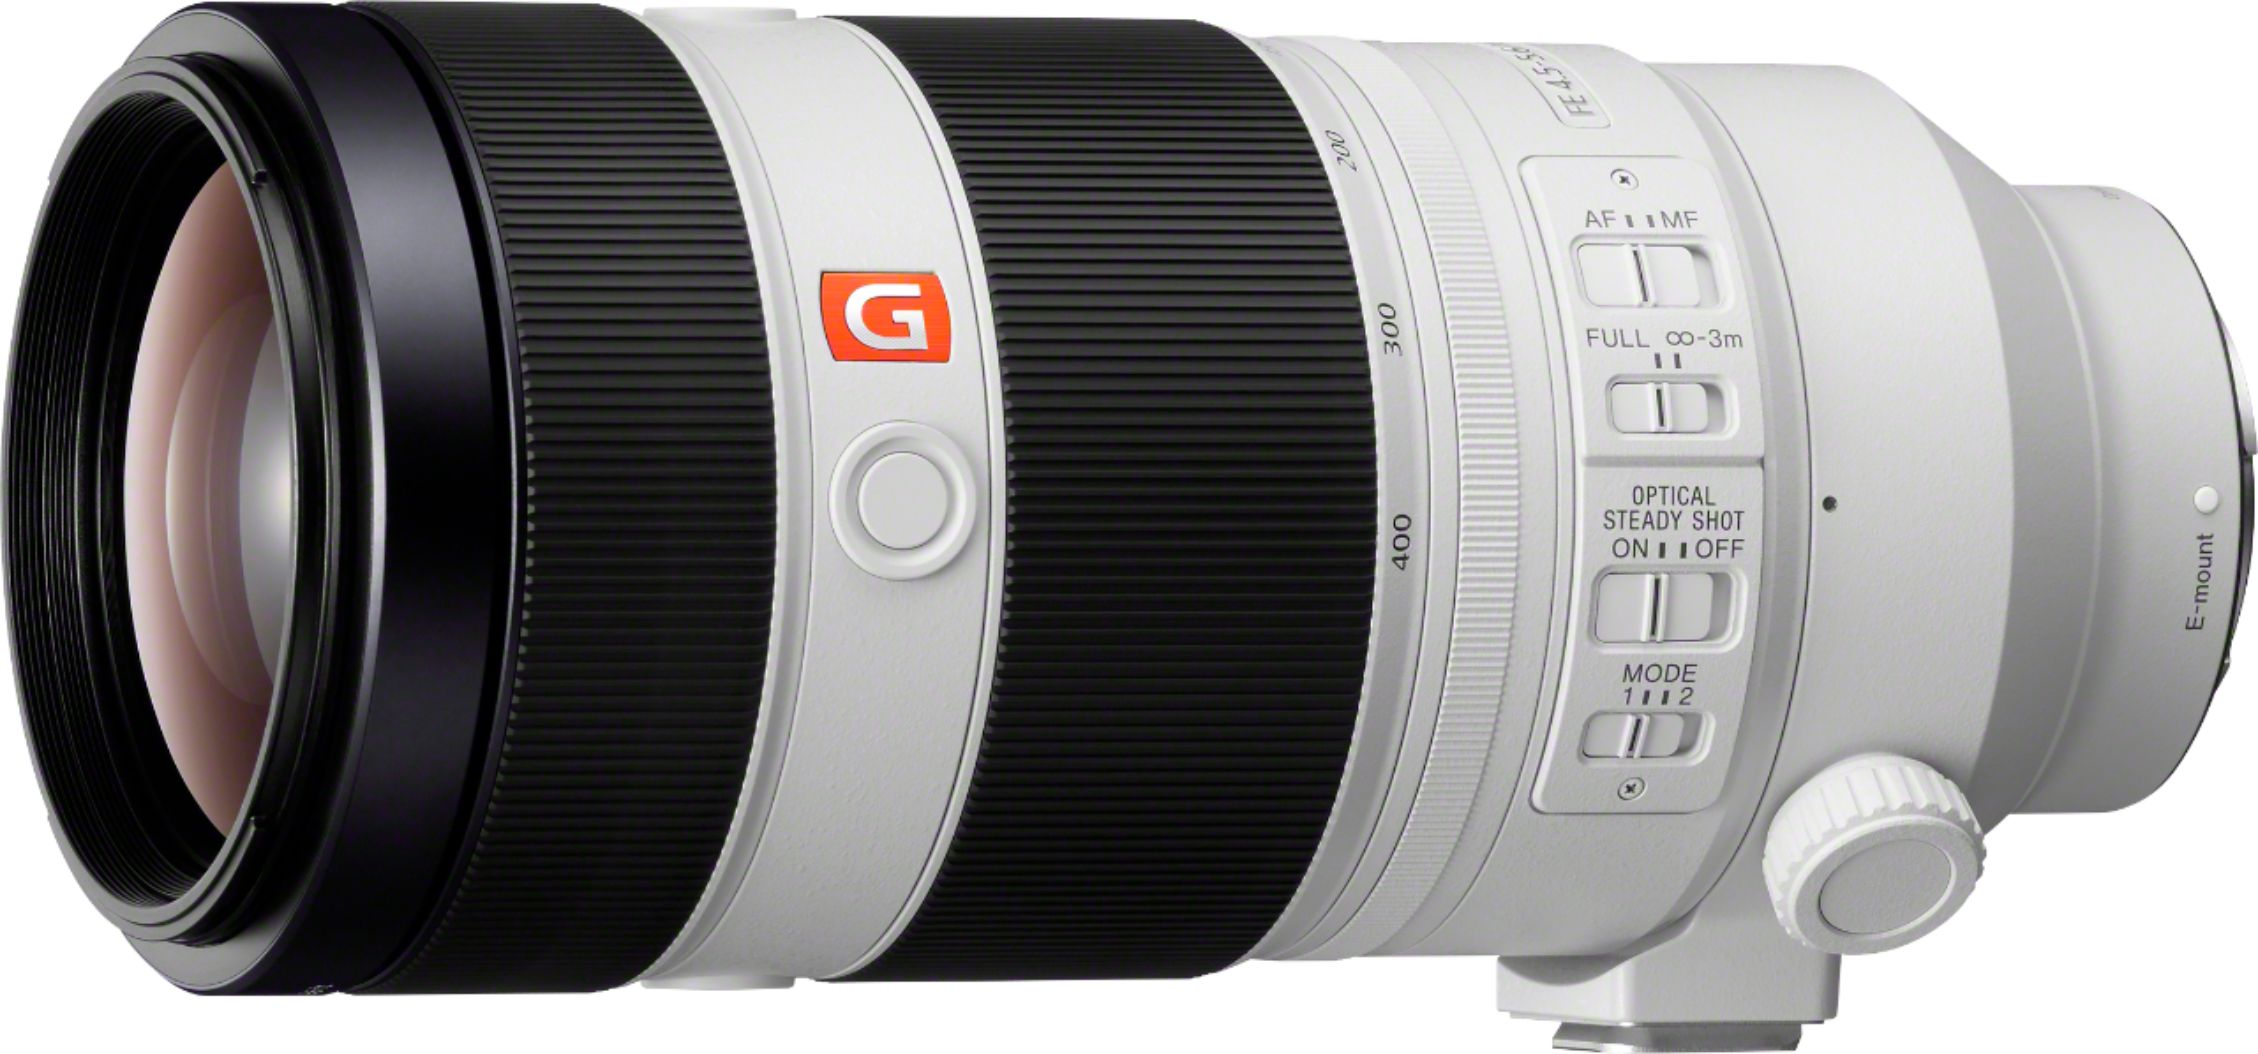 Angle View: Sony - FE 100-400mm f/4.5-5.6 GM OSS Super Telephoto Zoom Lens for E-mount Cameras - White